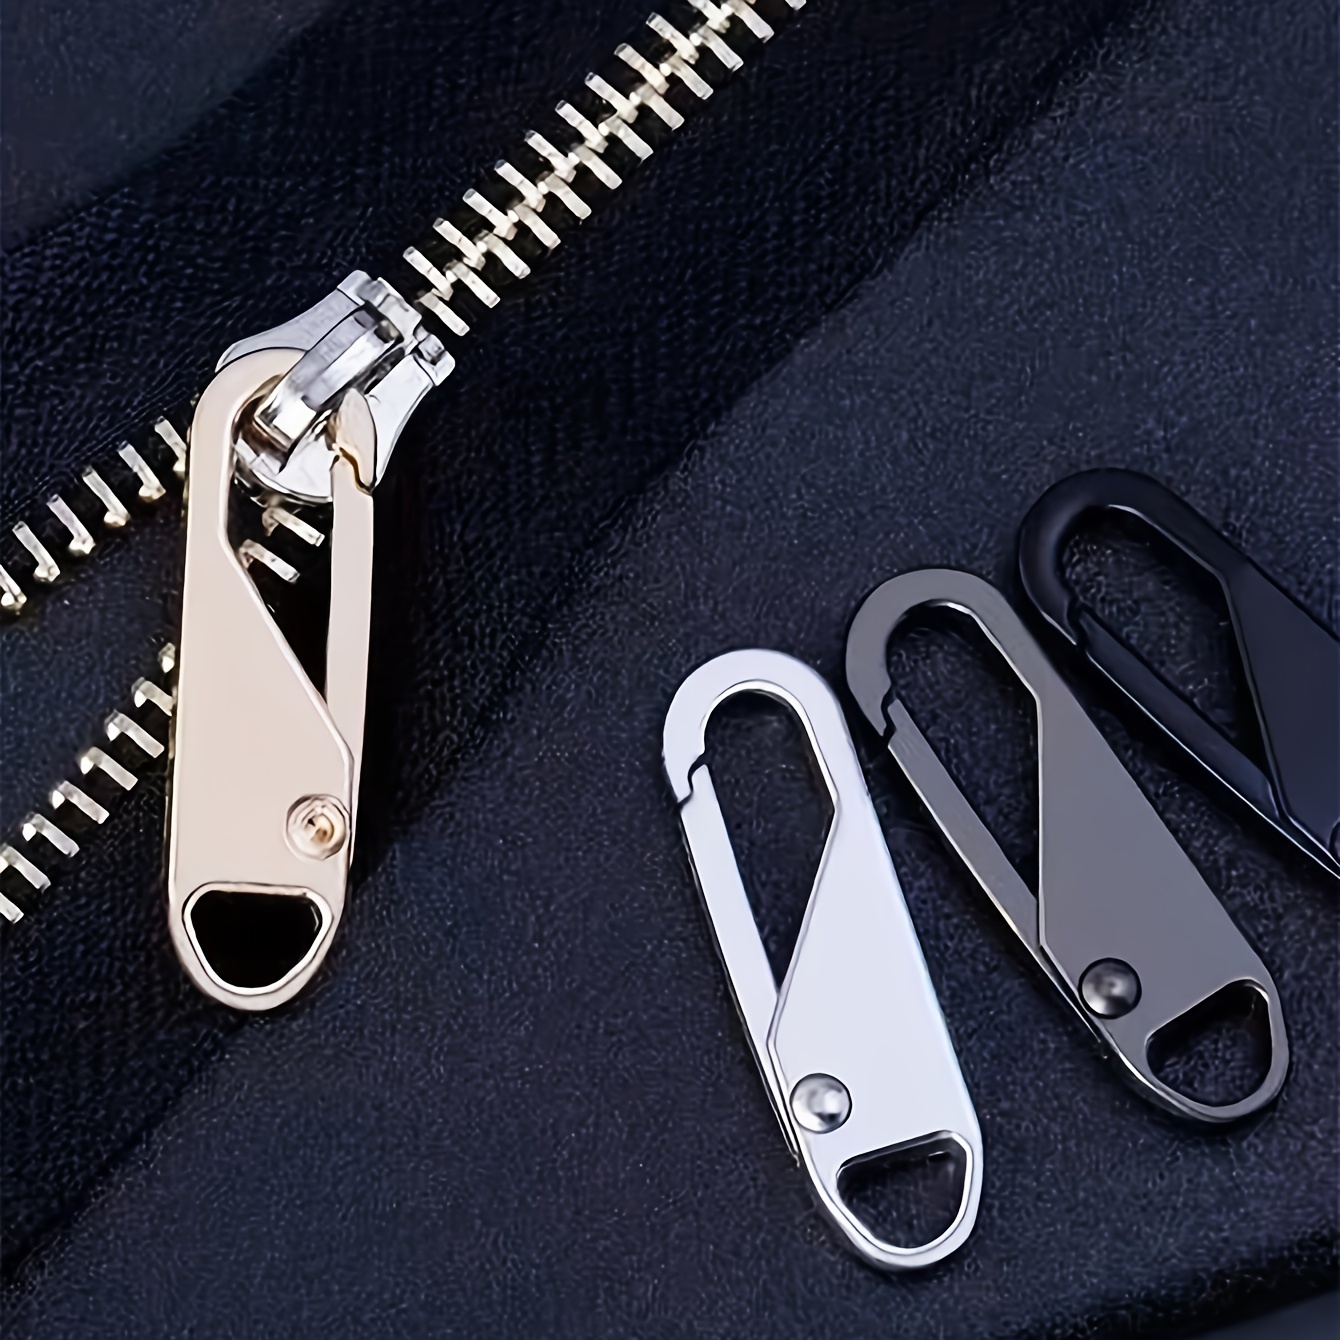 85PCS Zipper Repair Zipper Pull Metal Zipper Head Sliders Retainer Size  3/5/8# Zipper Replacement Kit with Zipper Install Pliers Tools